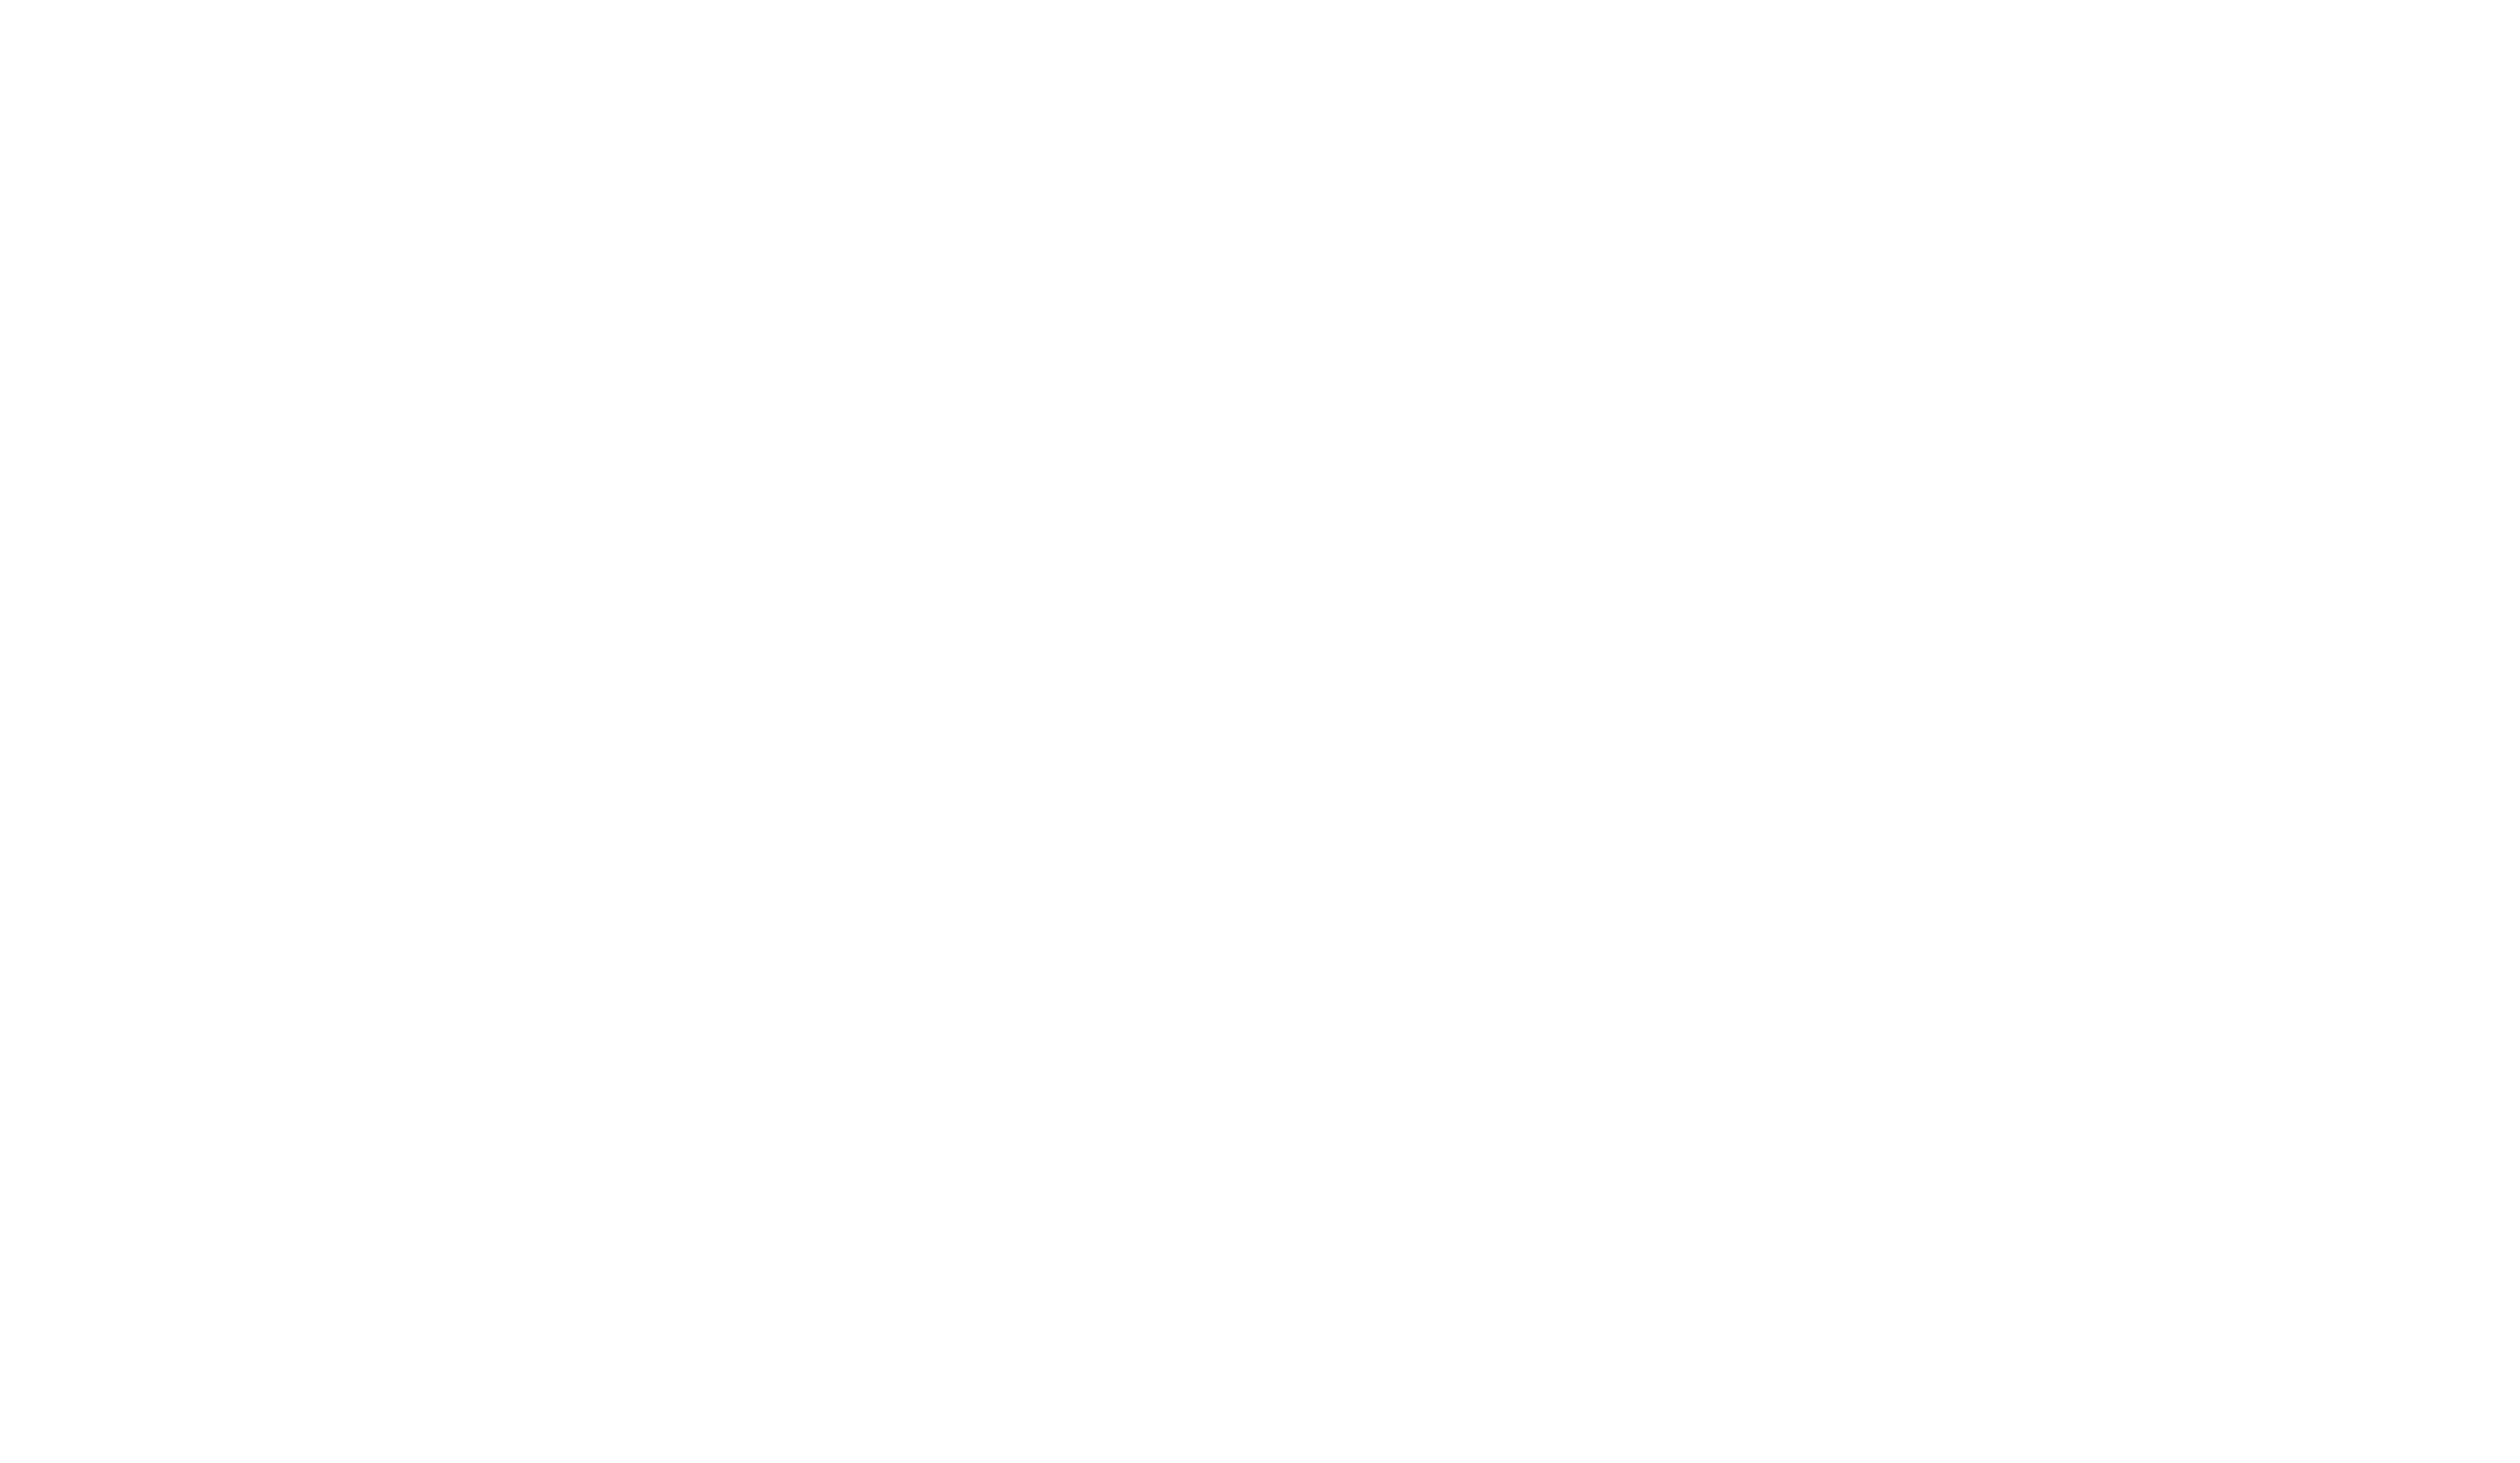 Leica, Leica Geosystem